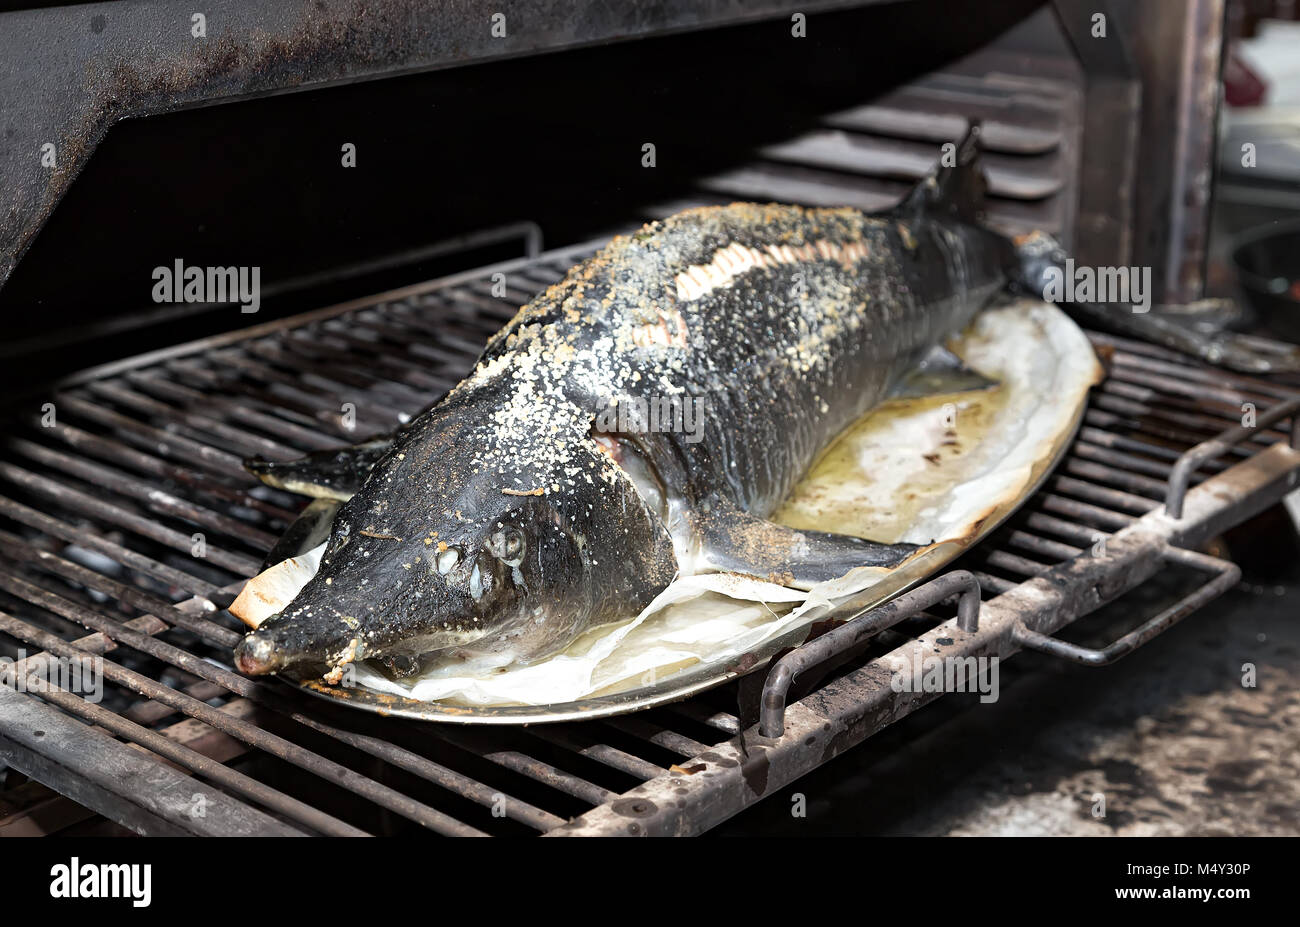 Royal fisch Stör vollständig auf dem Grill backen Stockfotografie - Alamy